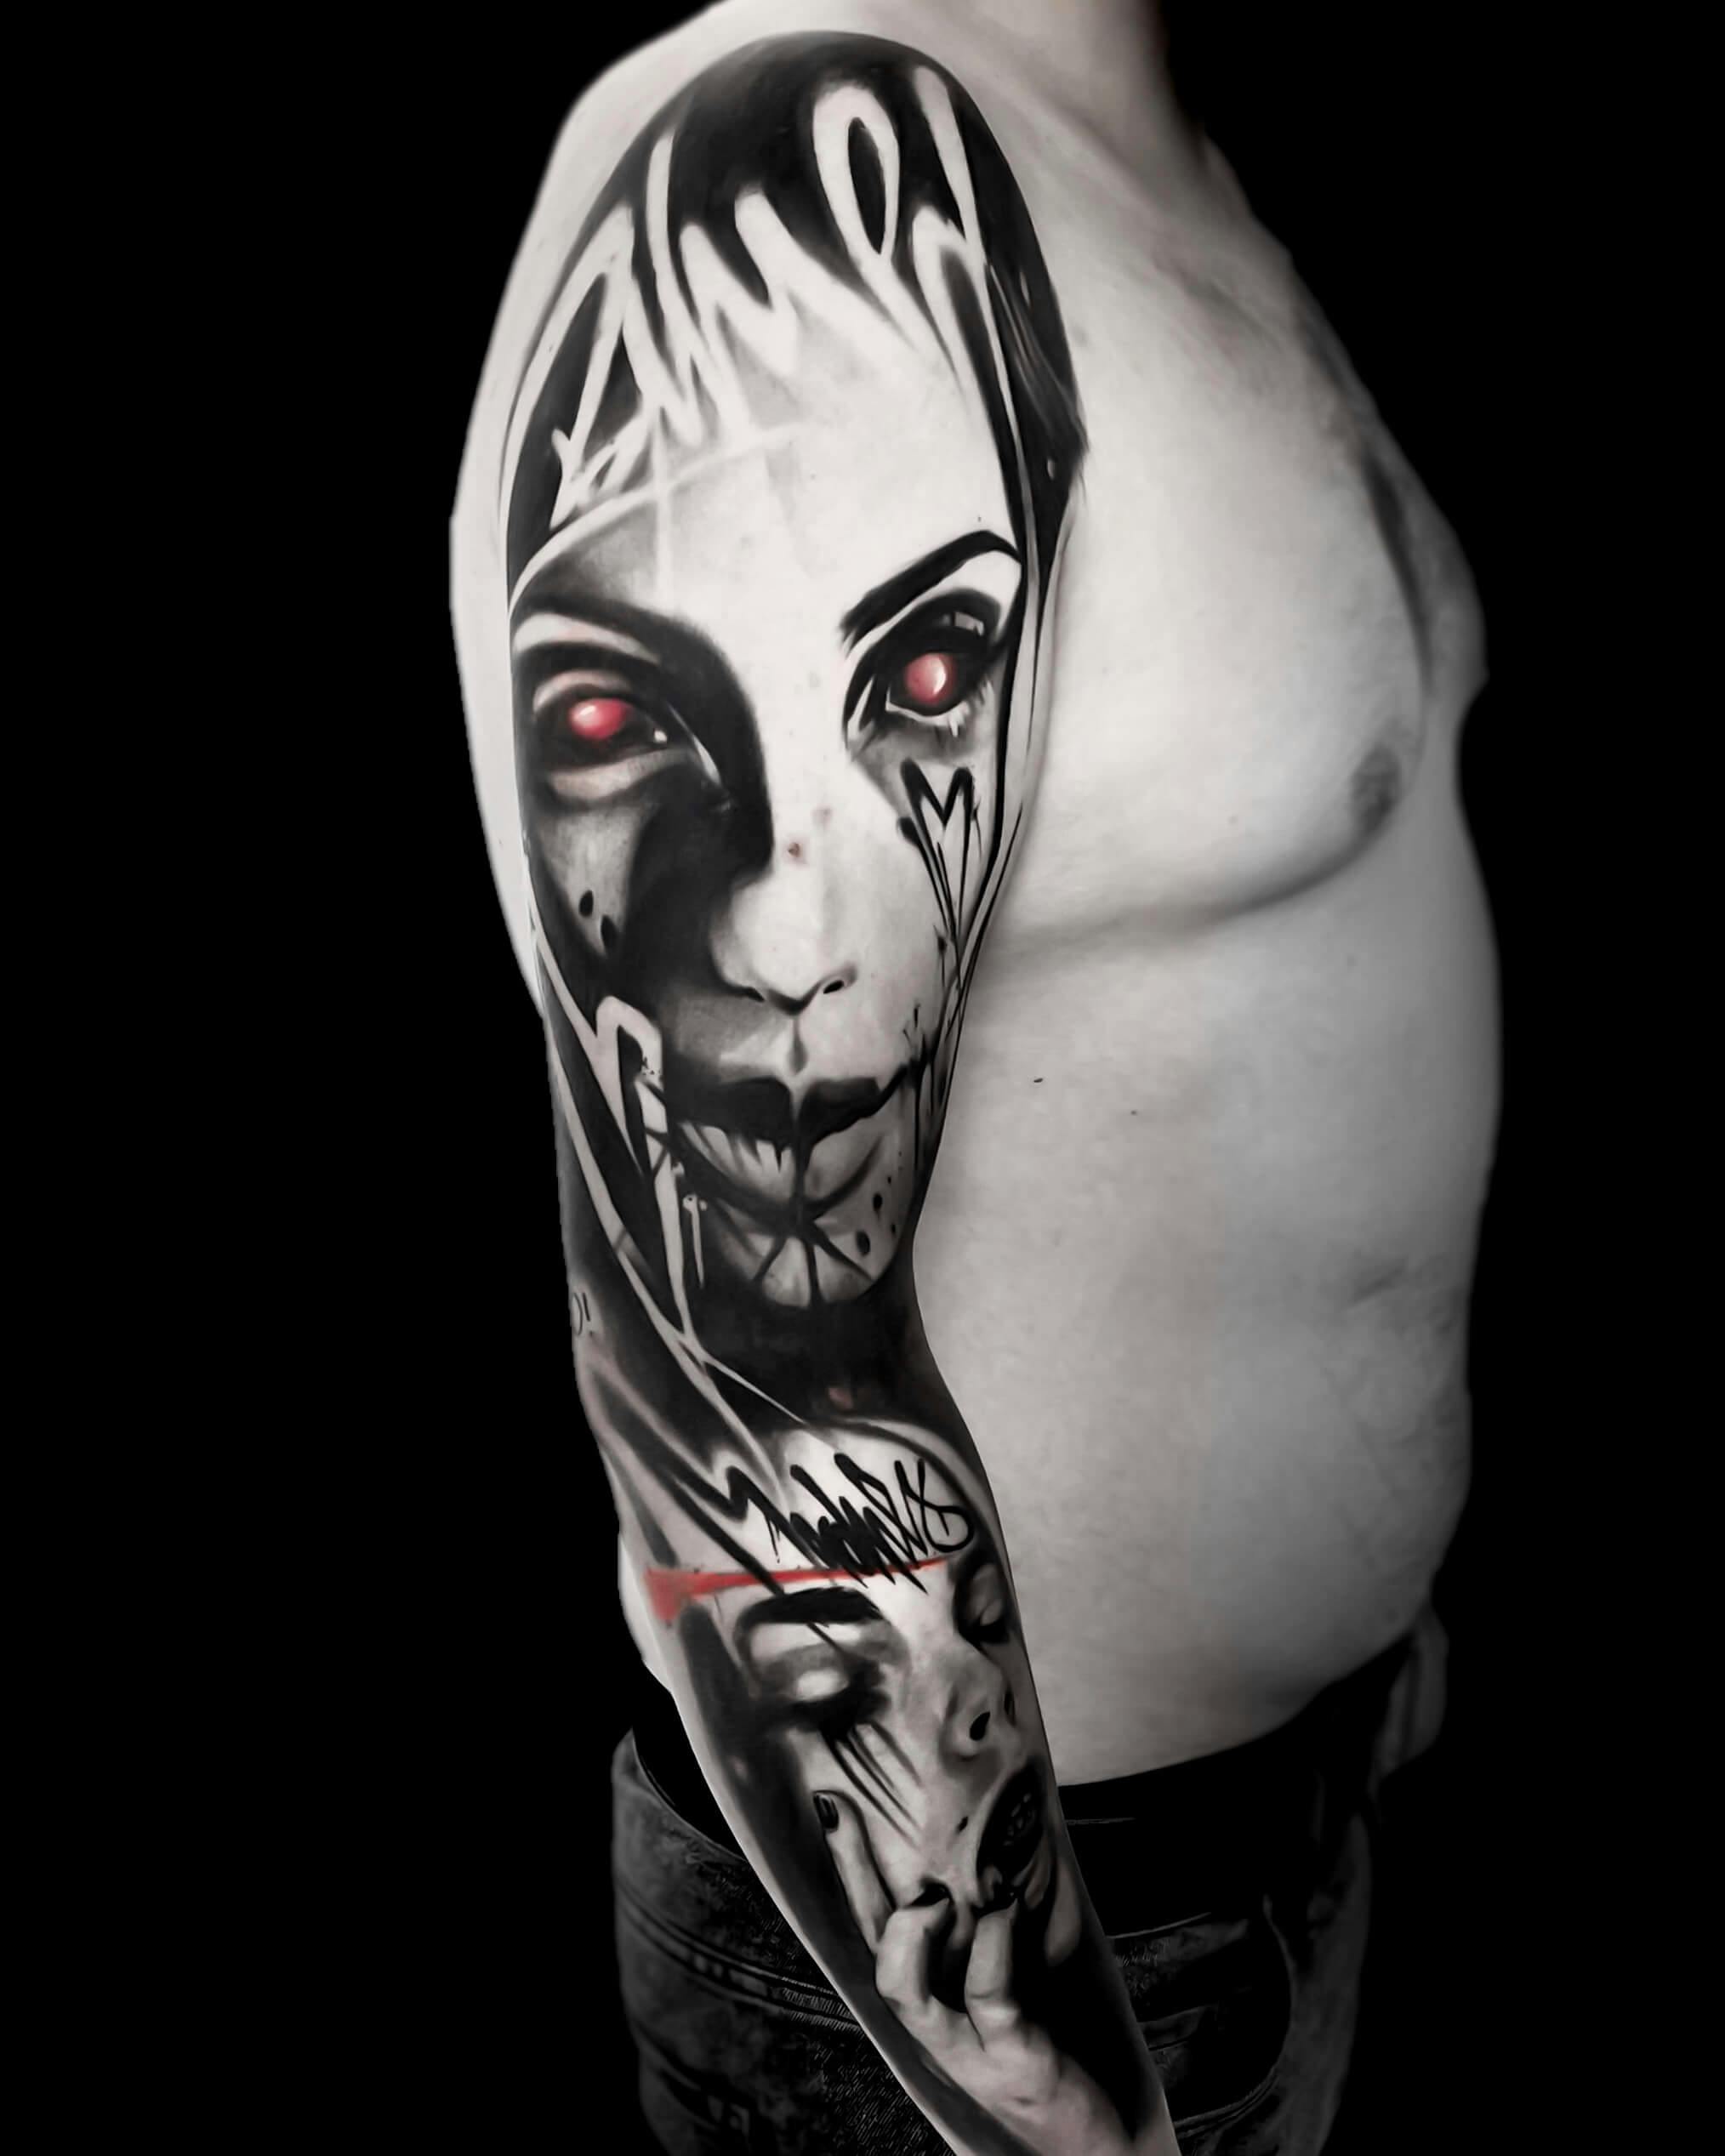 Korky tattoo artist - Ivan Koribanič porfolio image